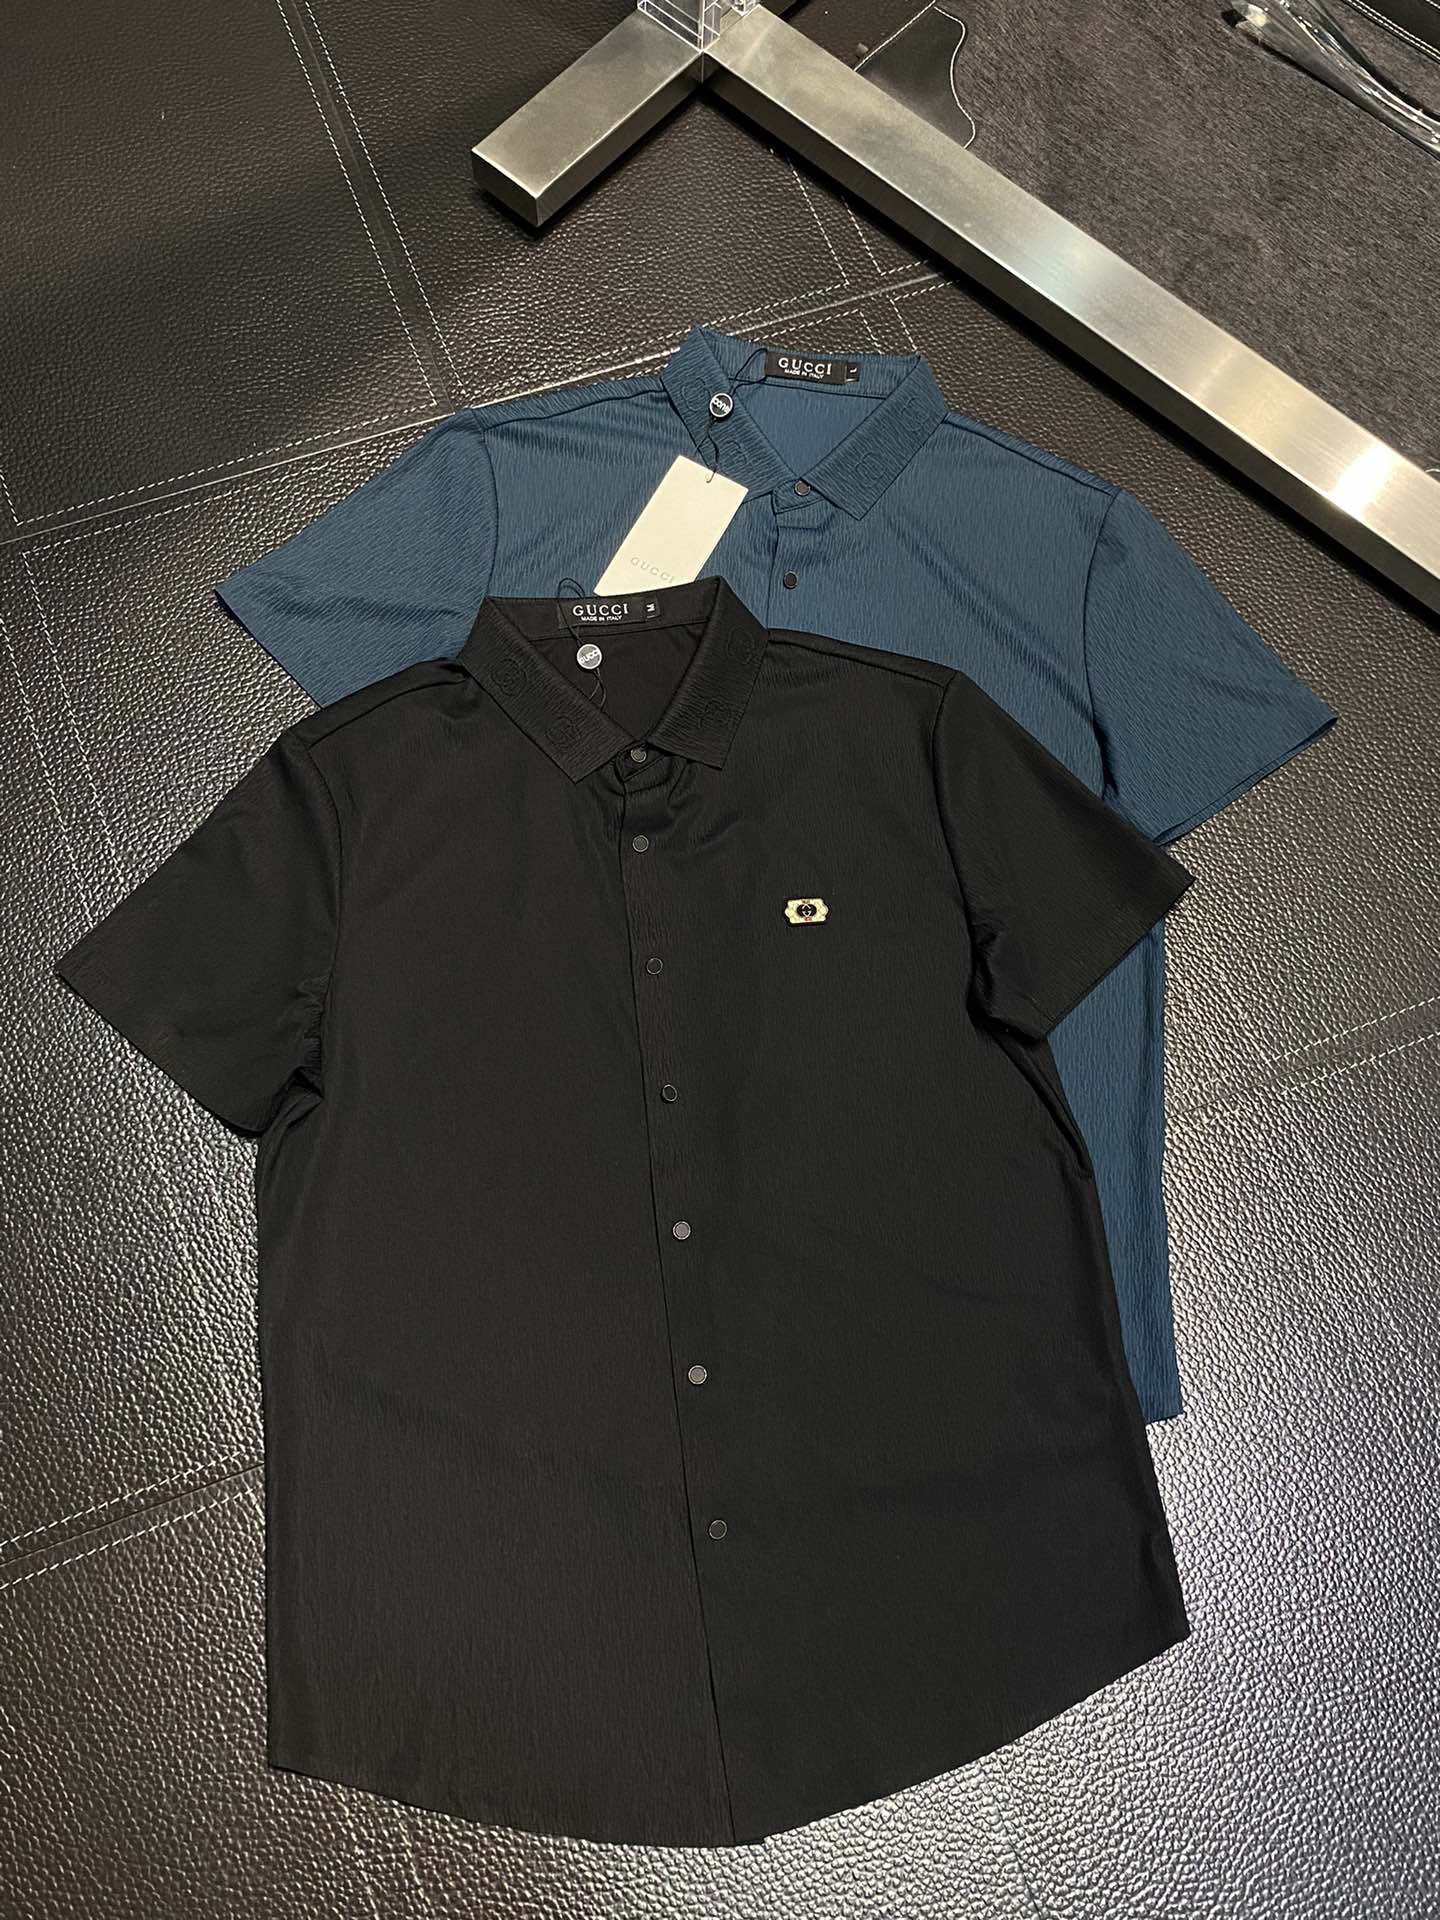 Gucci Clothing Polo T-Shirt Men Fashion Short Sleeve